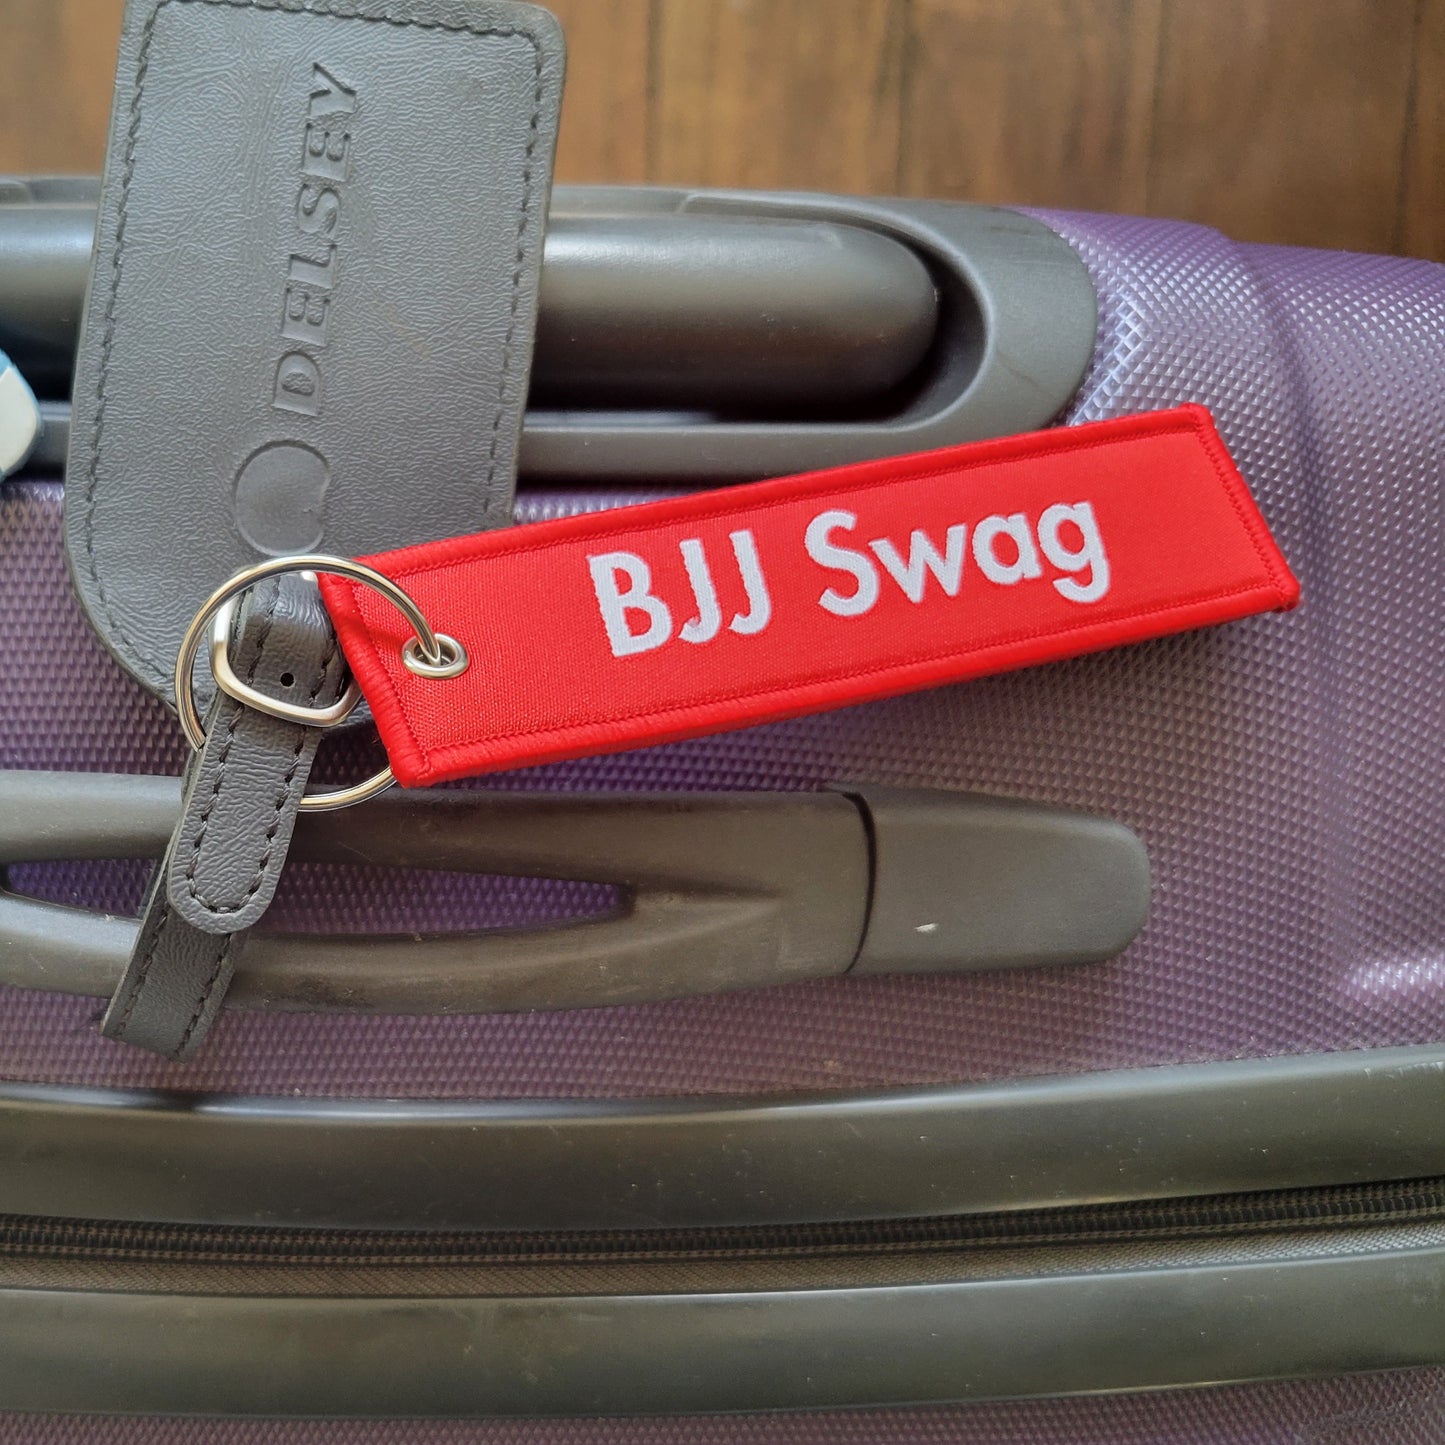 BJJ Swag Jet Tag Key Chain - BJJ Swag